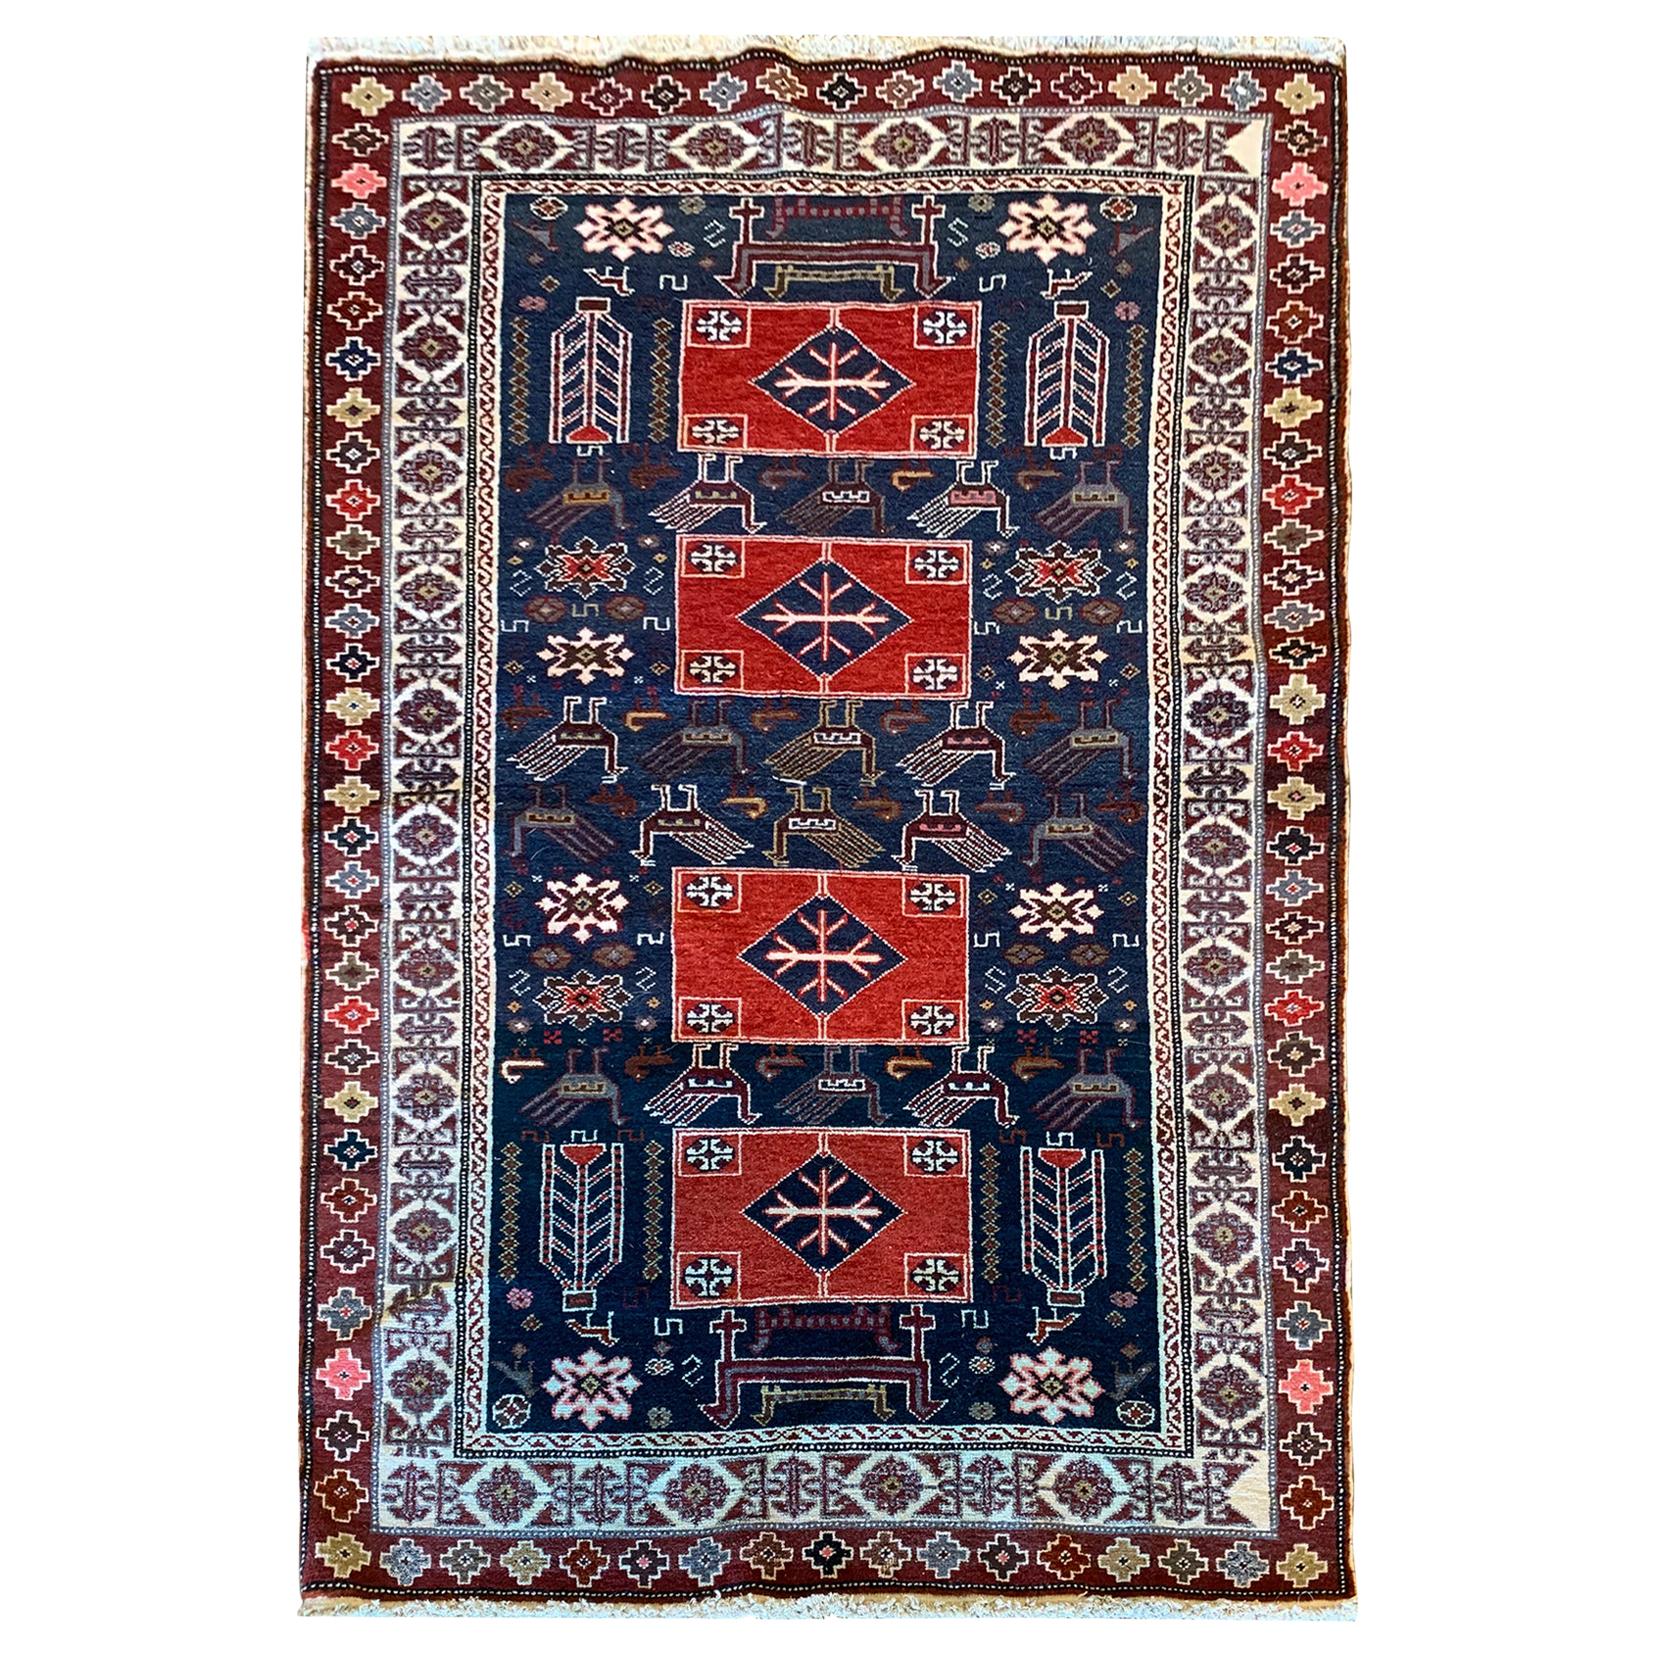 Azerbaijan Rug Antique Wool Blue Red Carpet Handmade